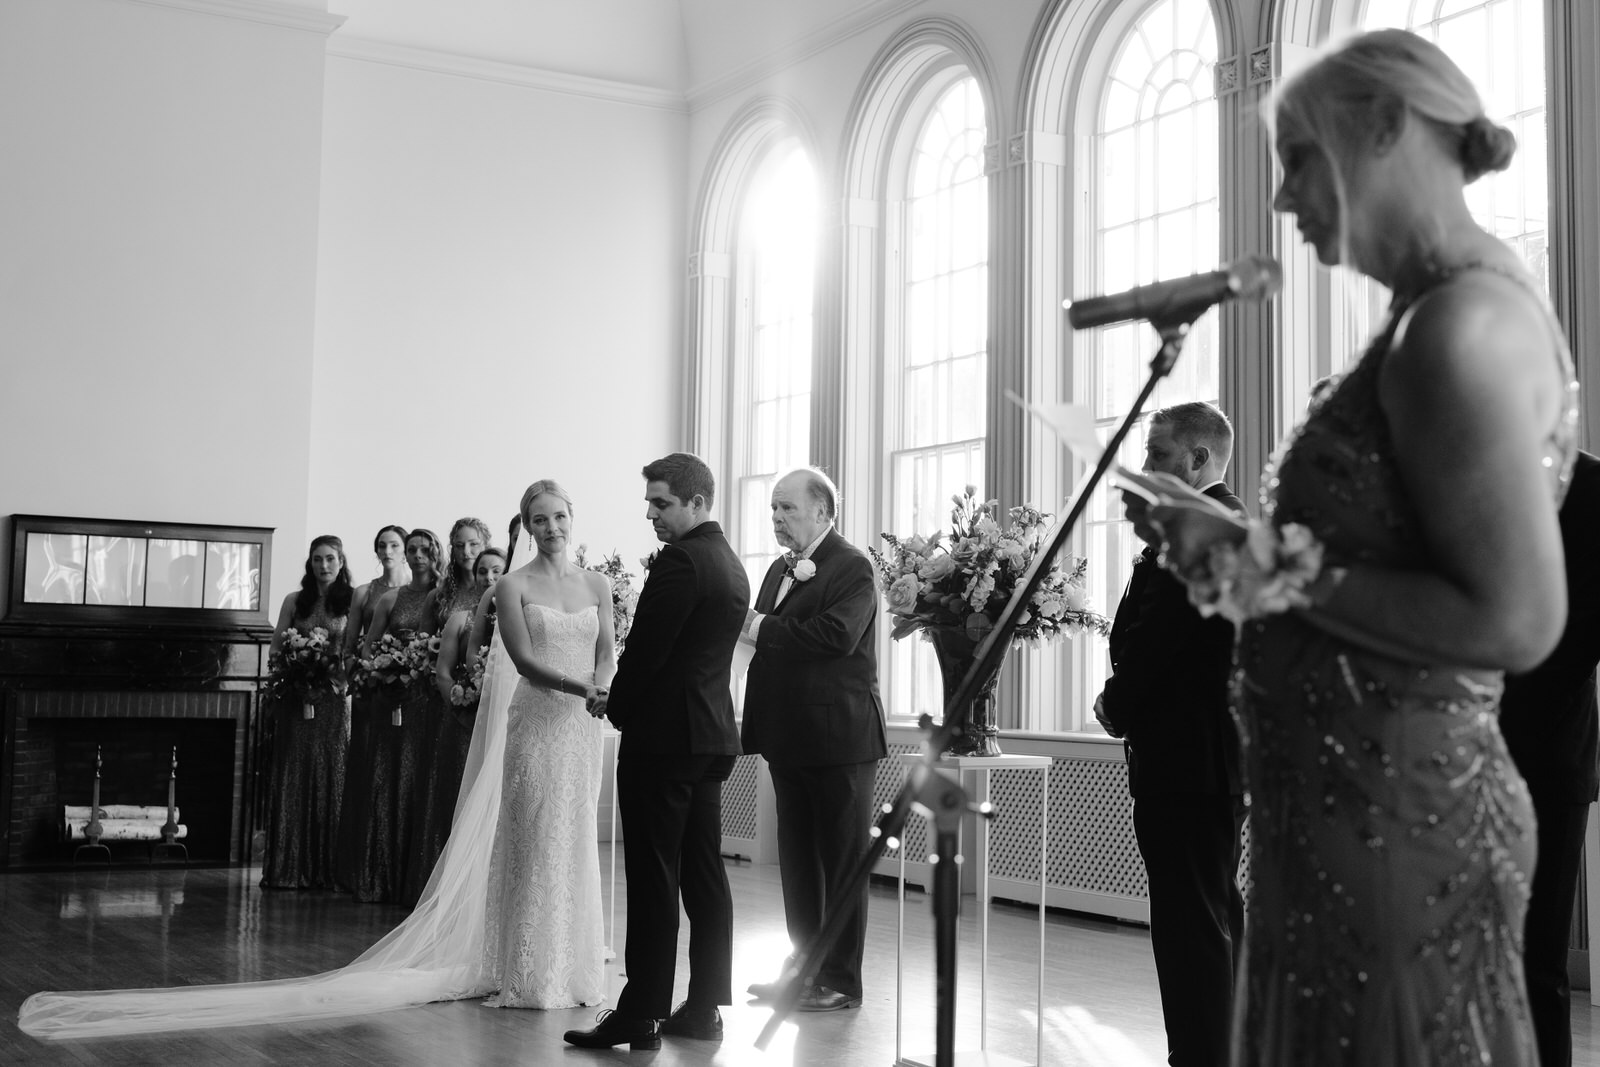 Speech at ceremony peabody essex museum wedding